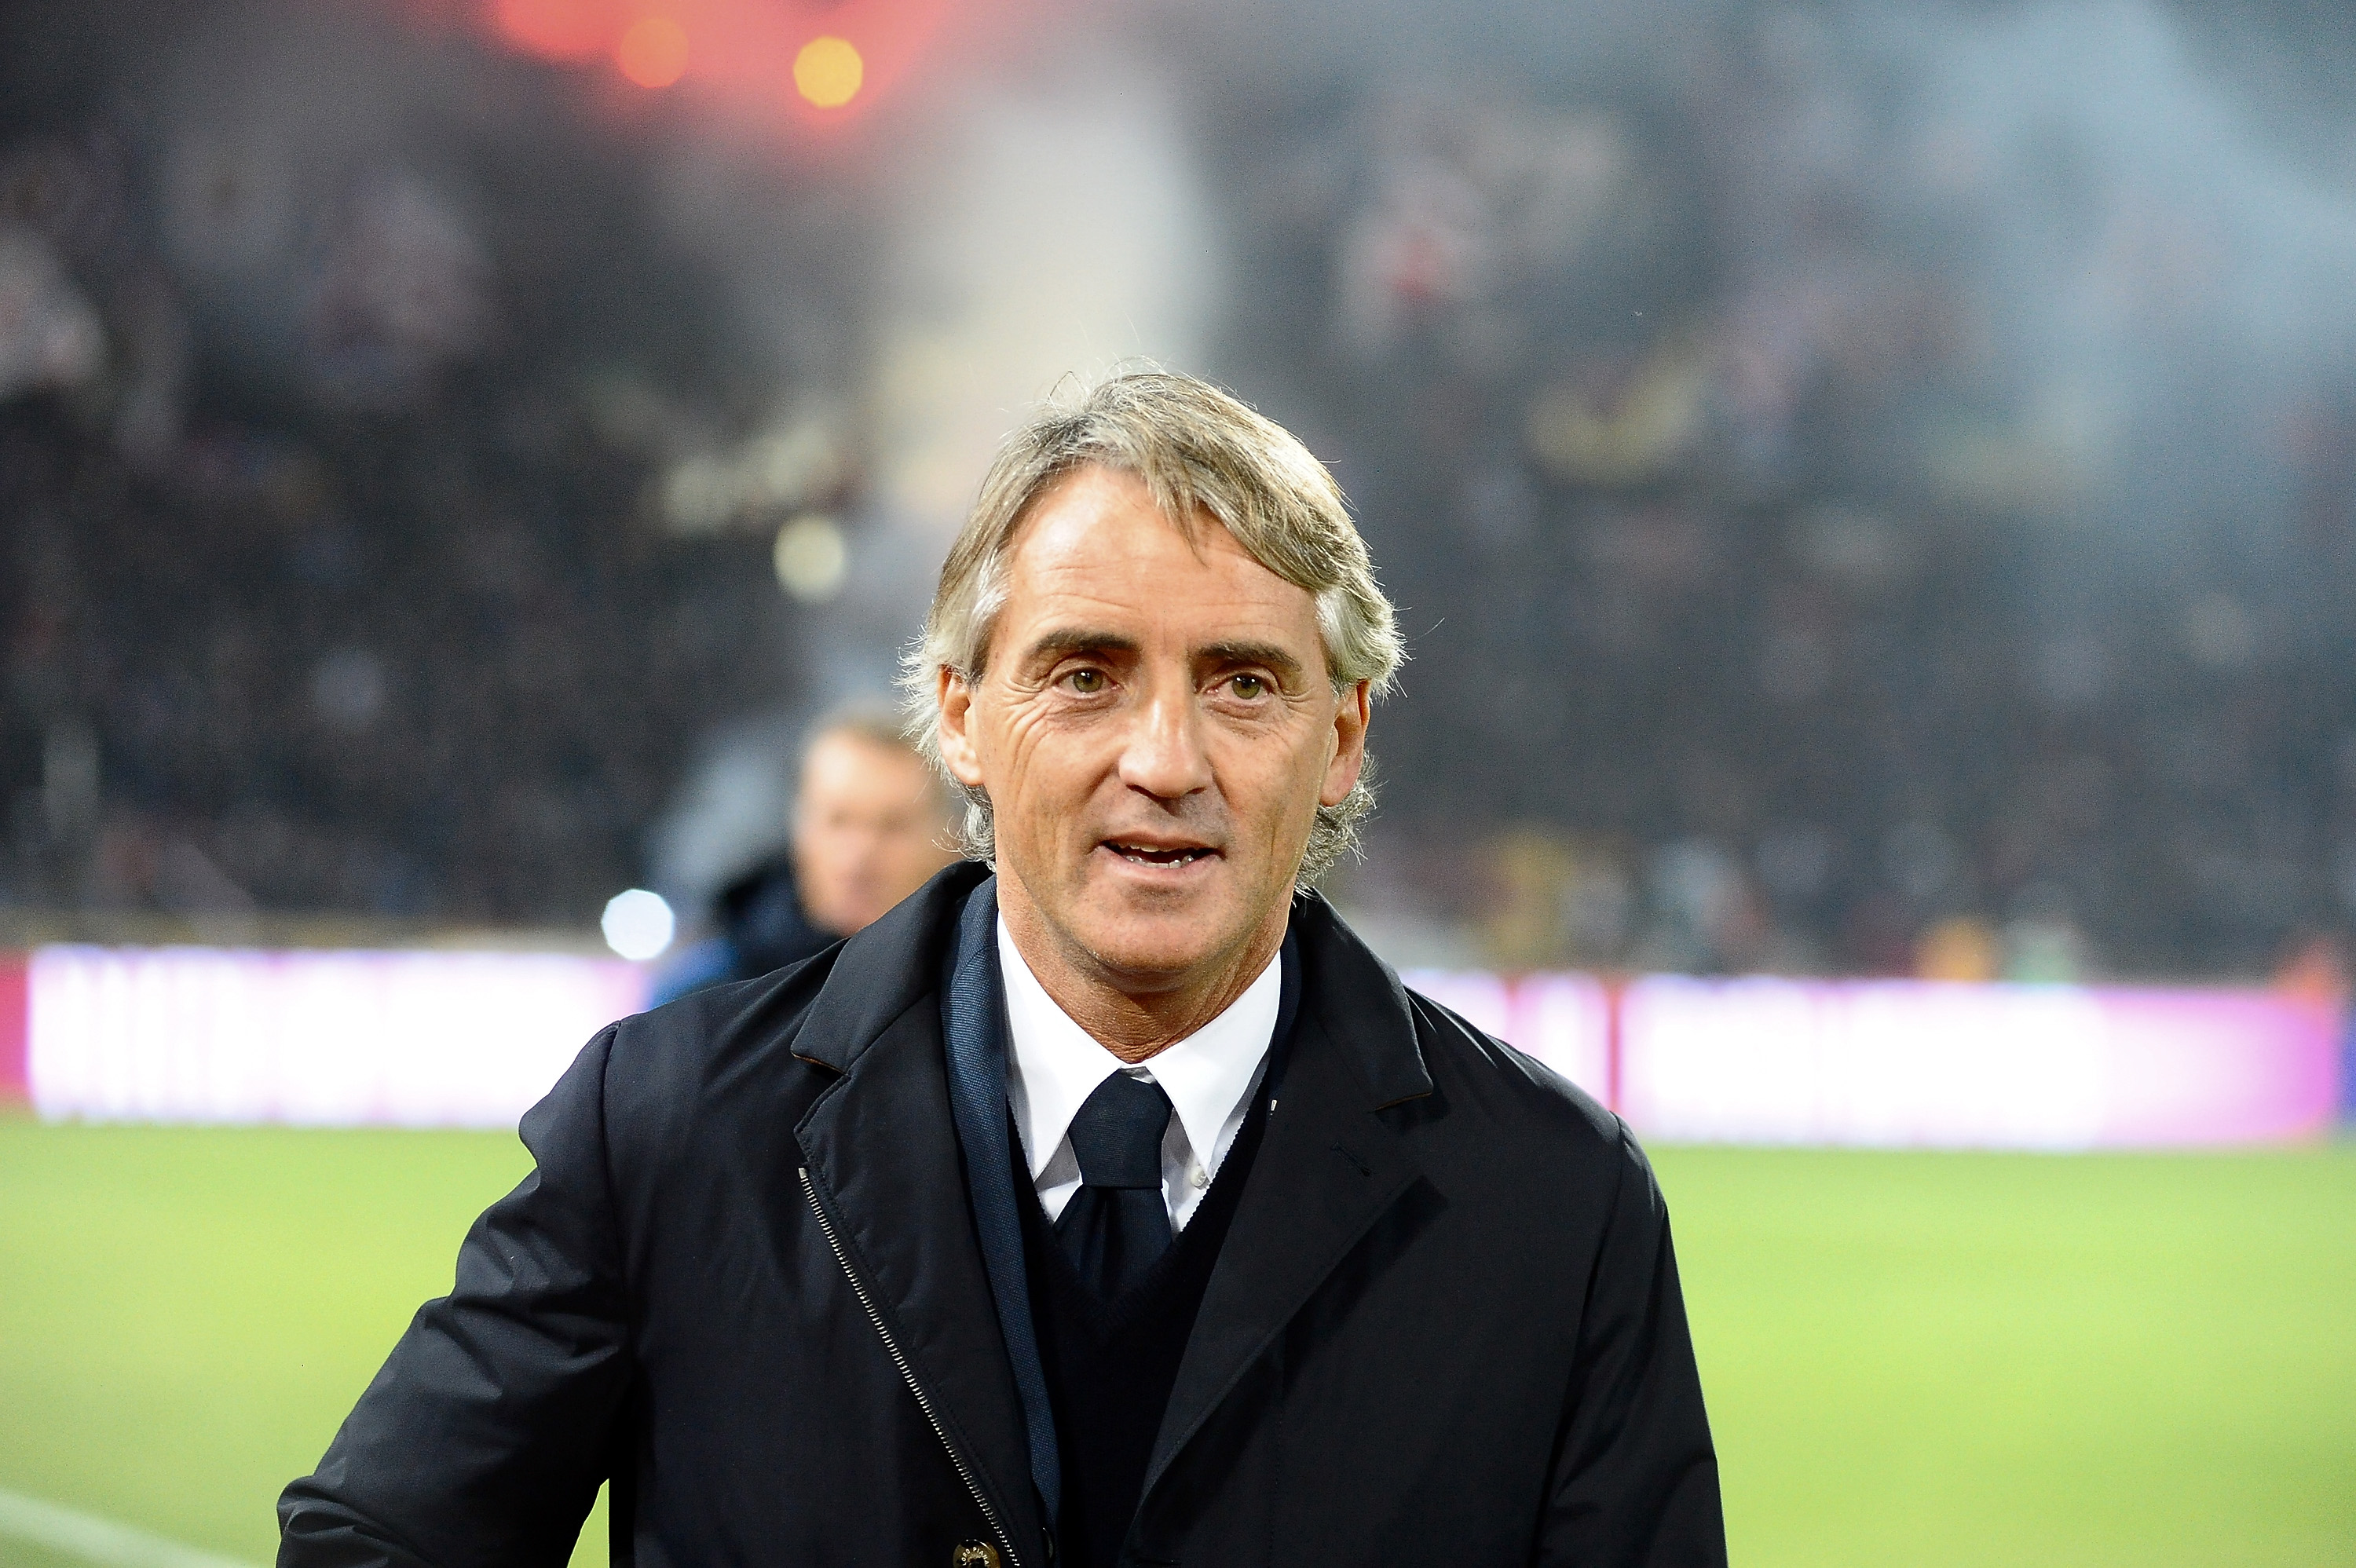 Mancini press conference ahead of Inter vs Roma